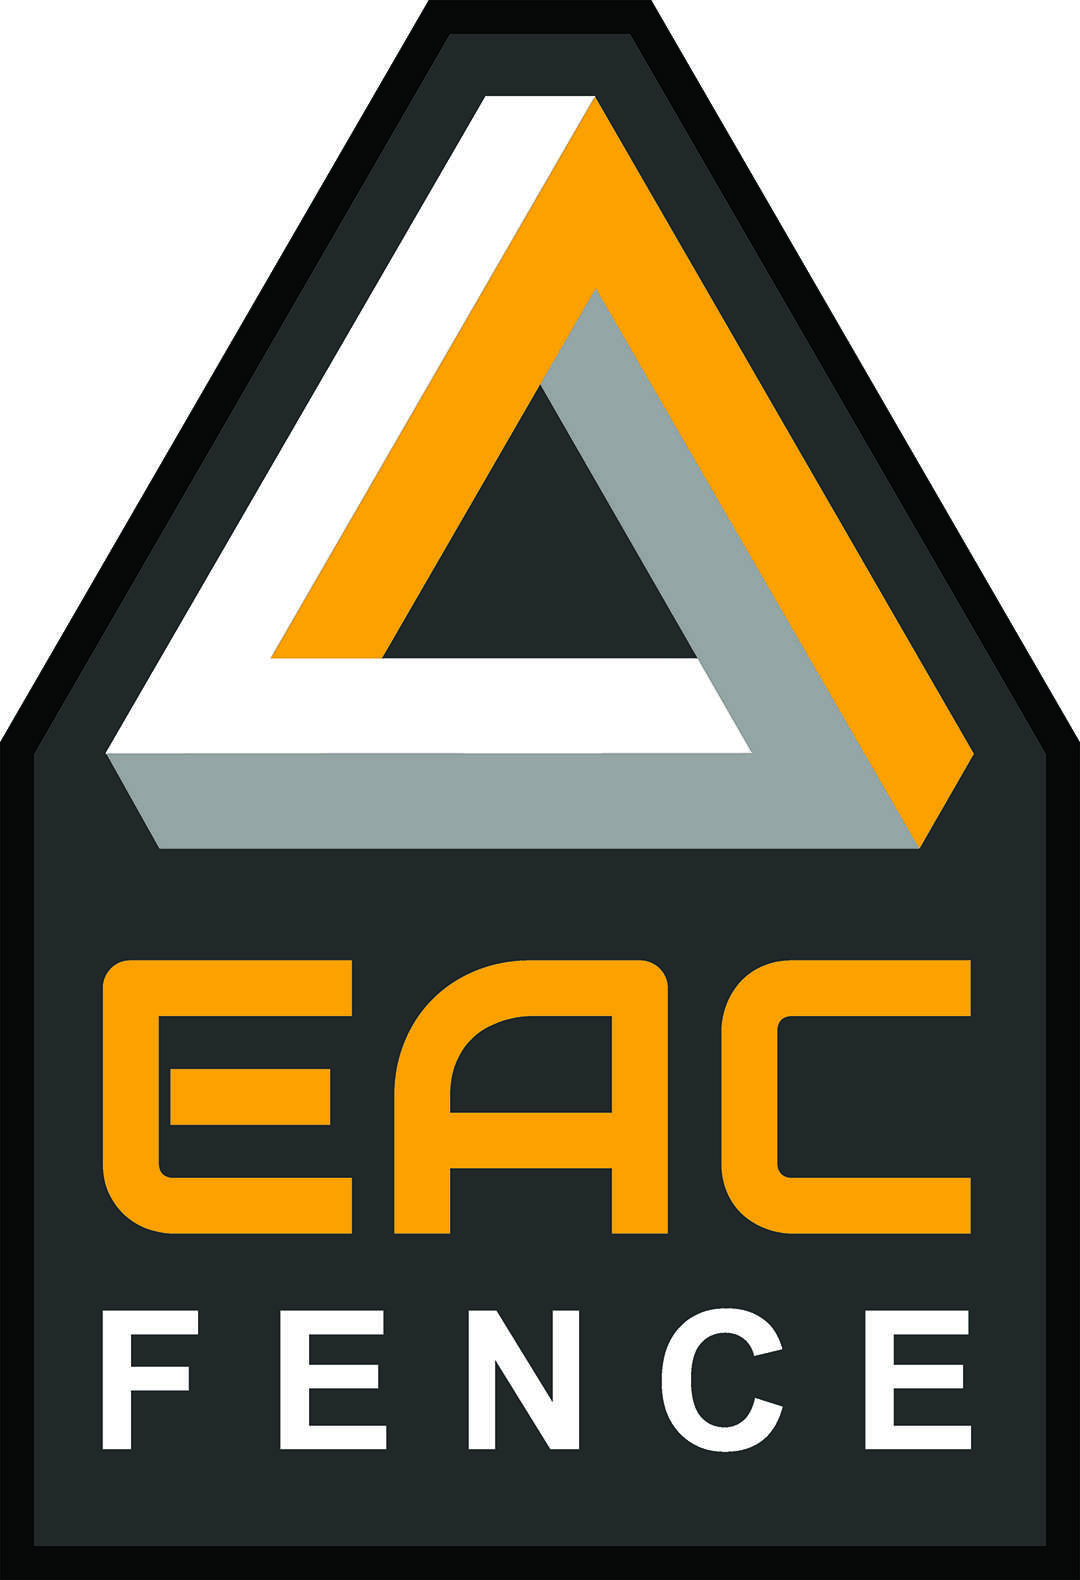 EAC Fence Logo